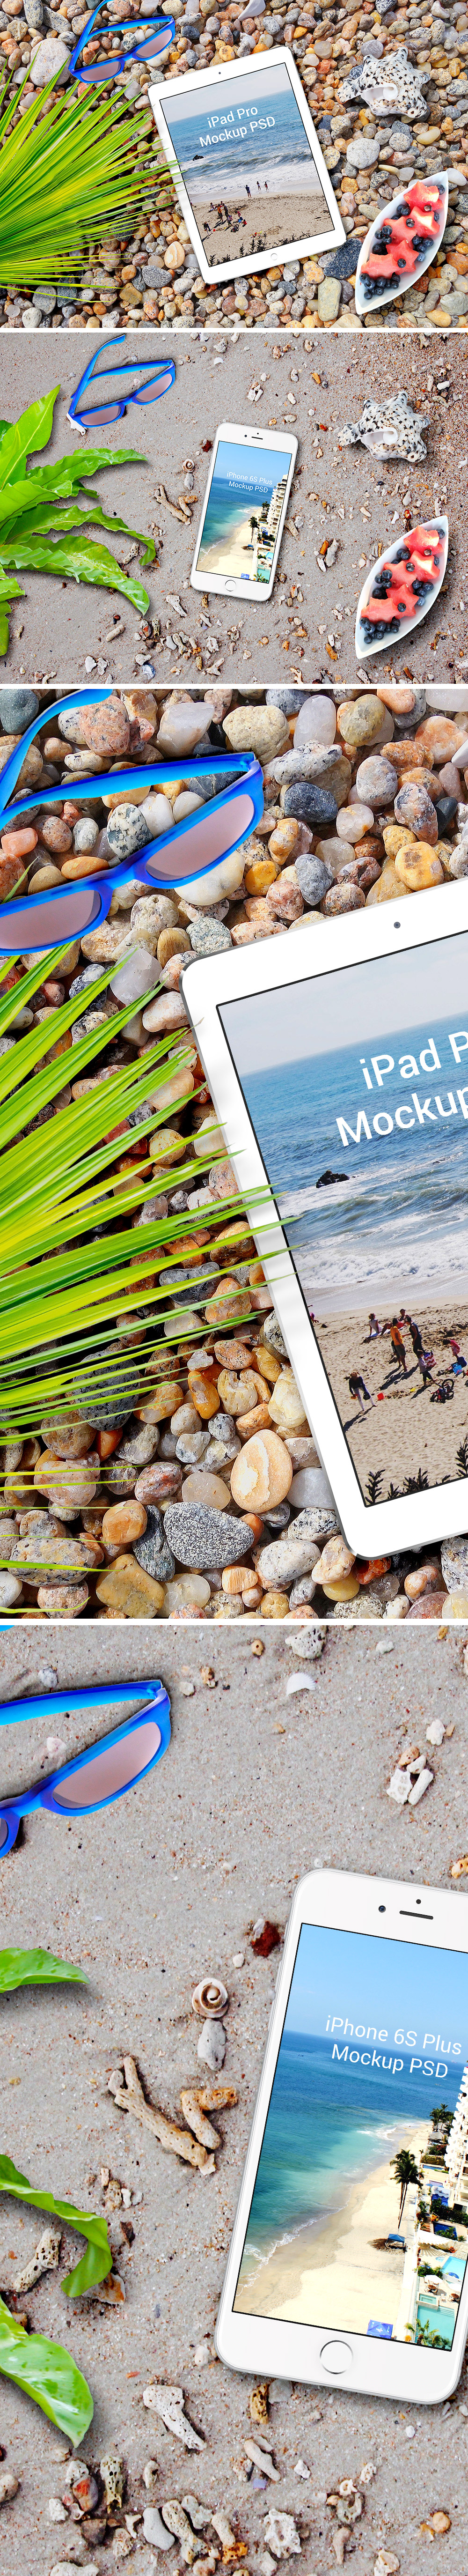 iPhone 6s Plus & iPad Pro Beach Mockup